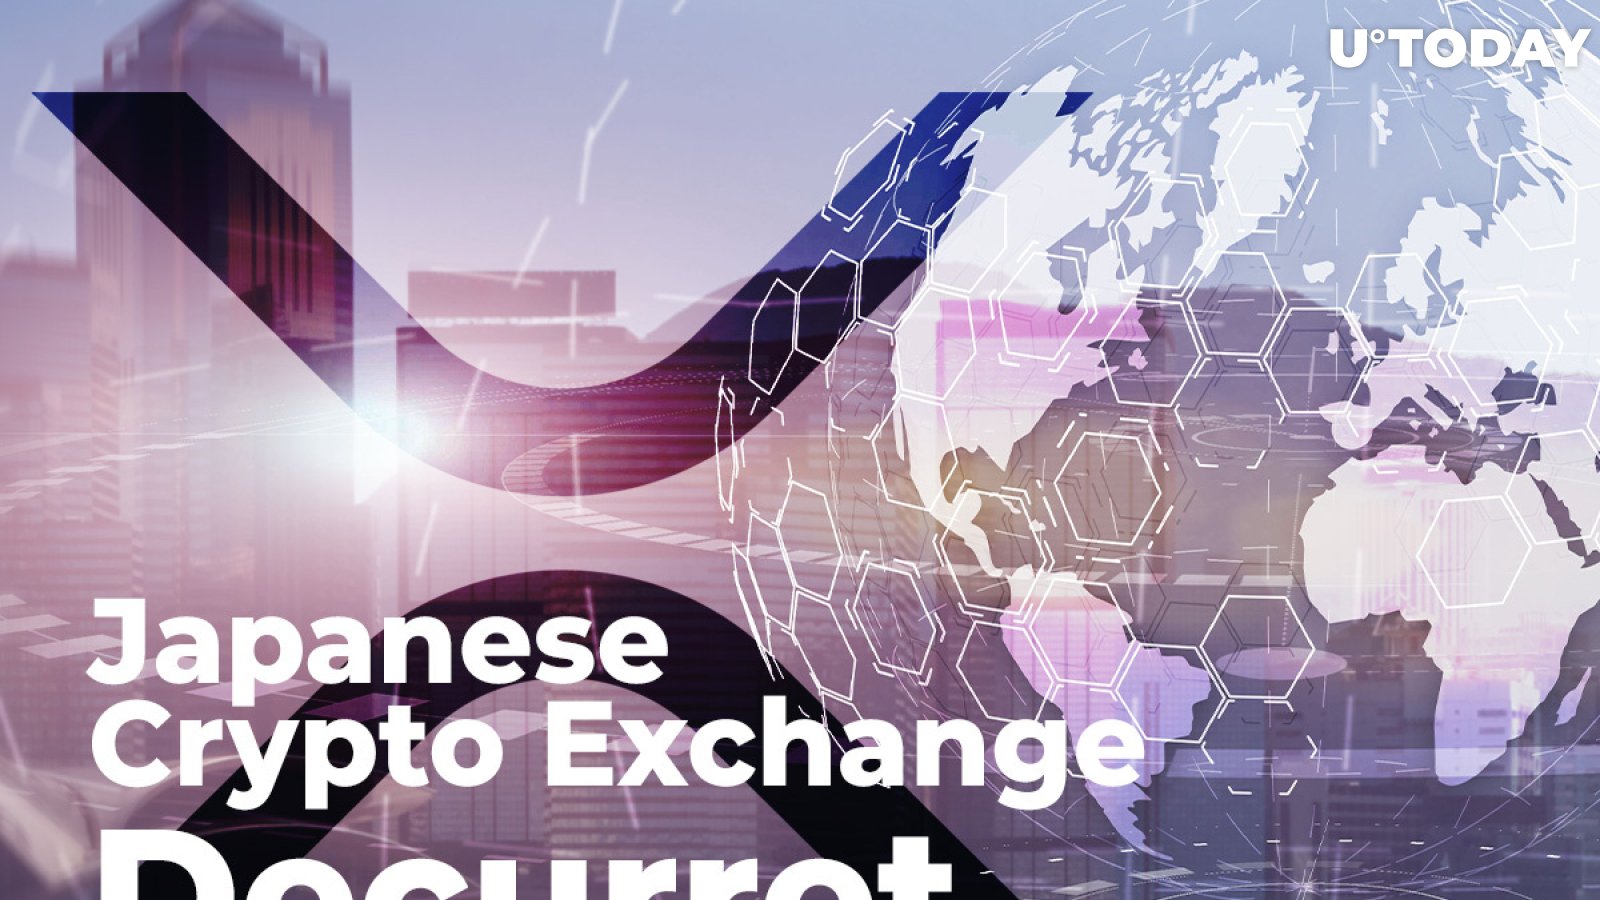 Japanese Crypto Exchange DeCurret Restarts XRP Trading: Community